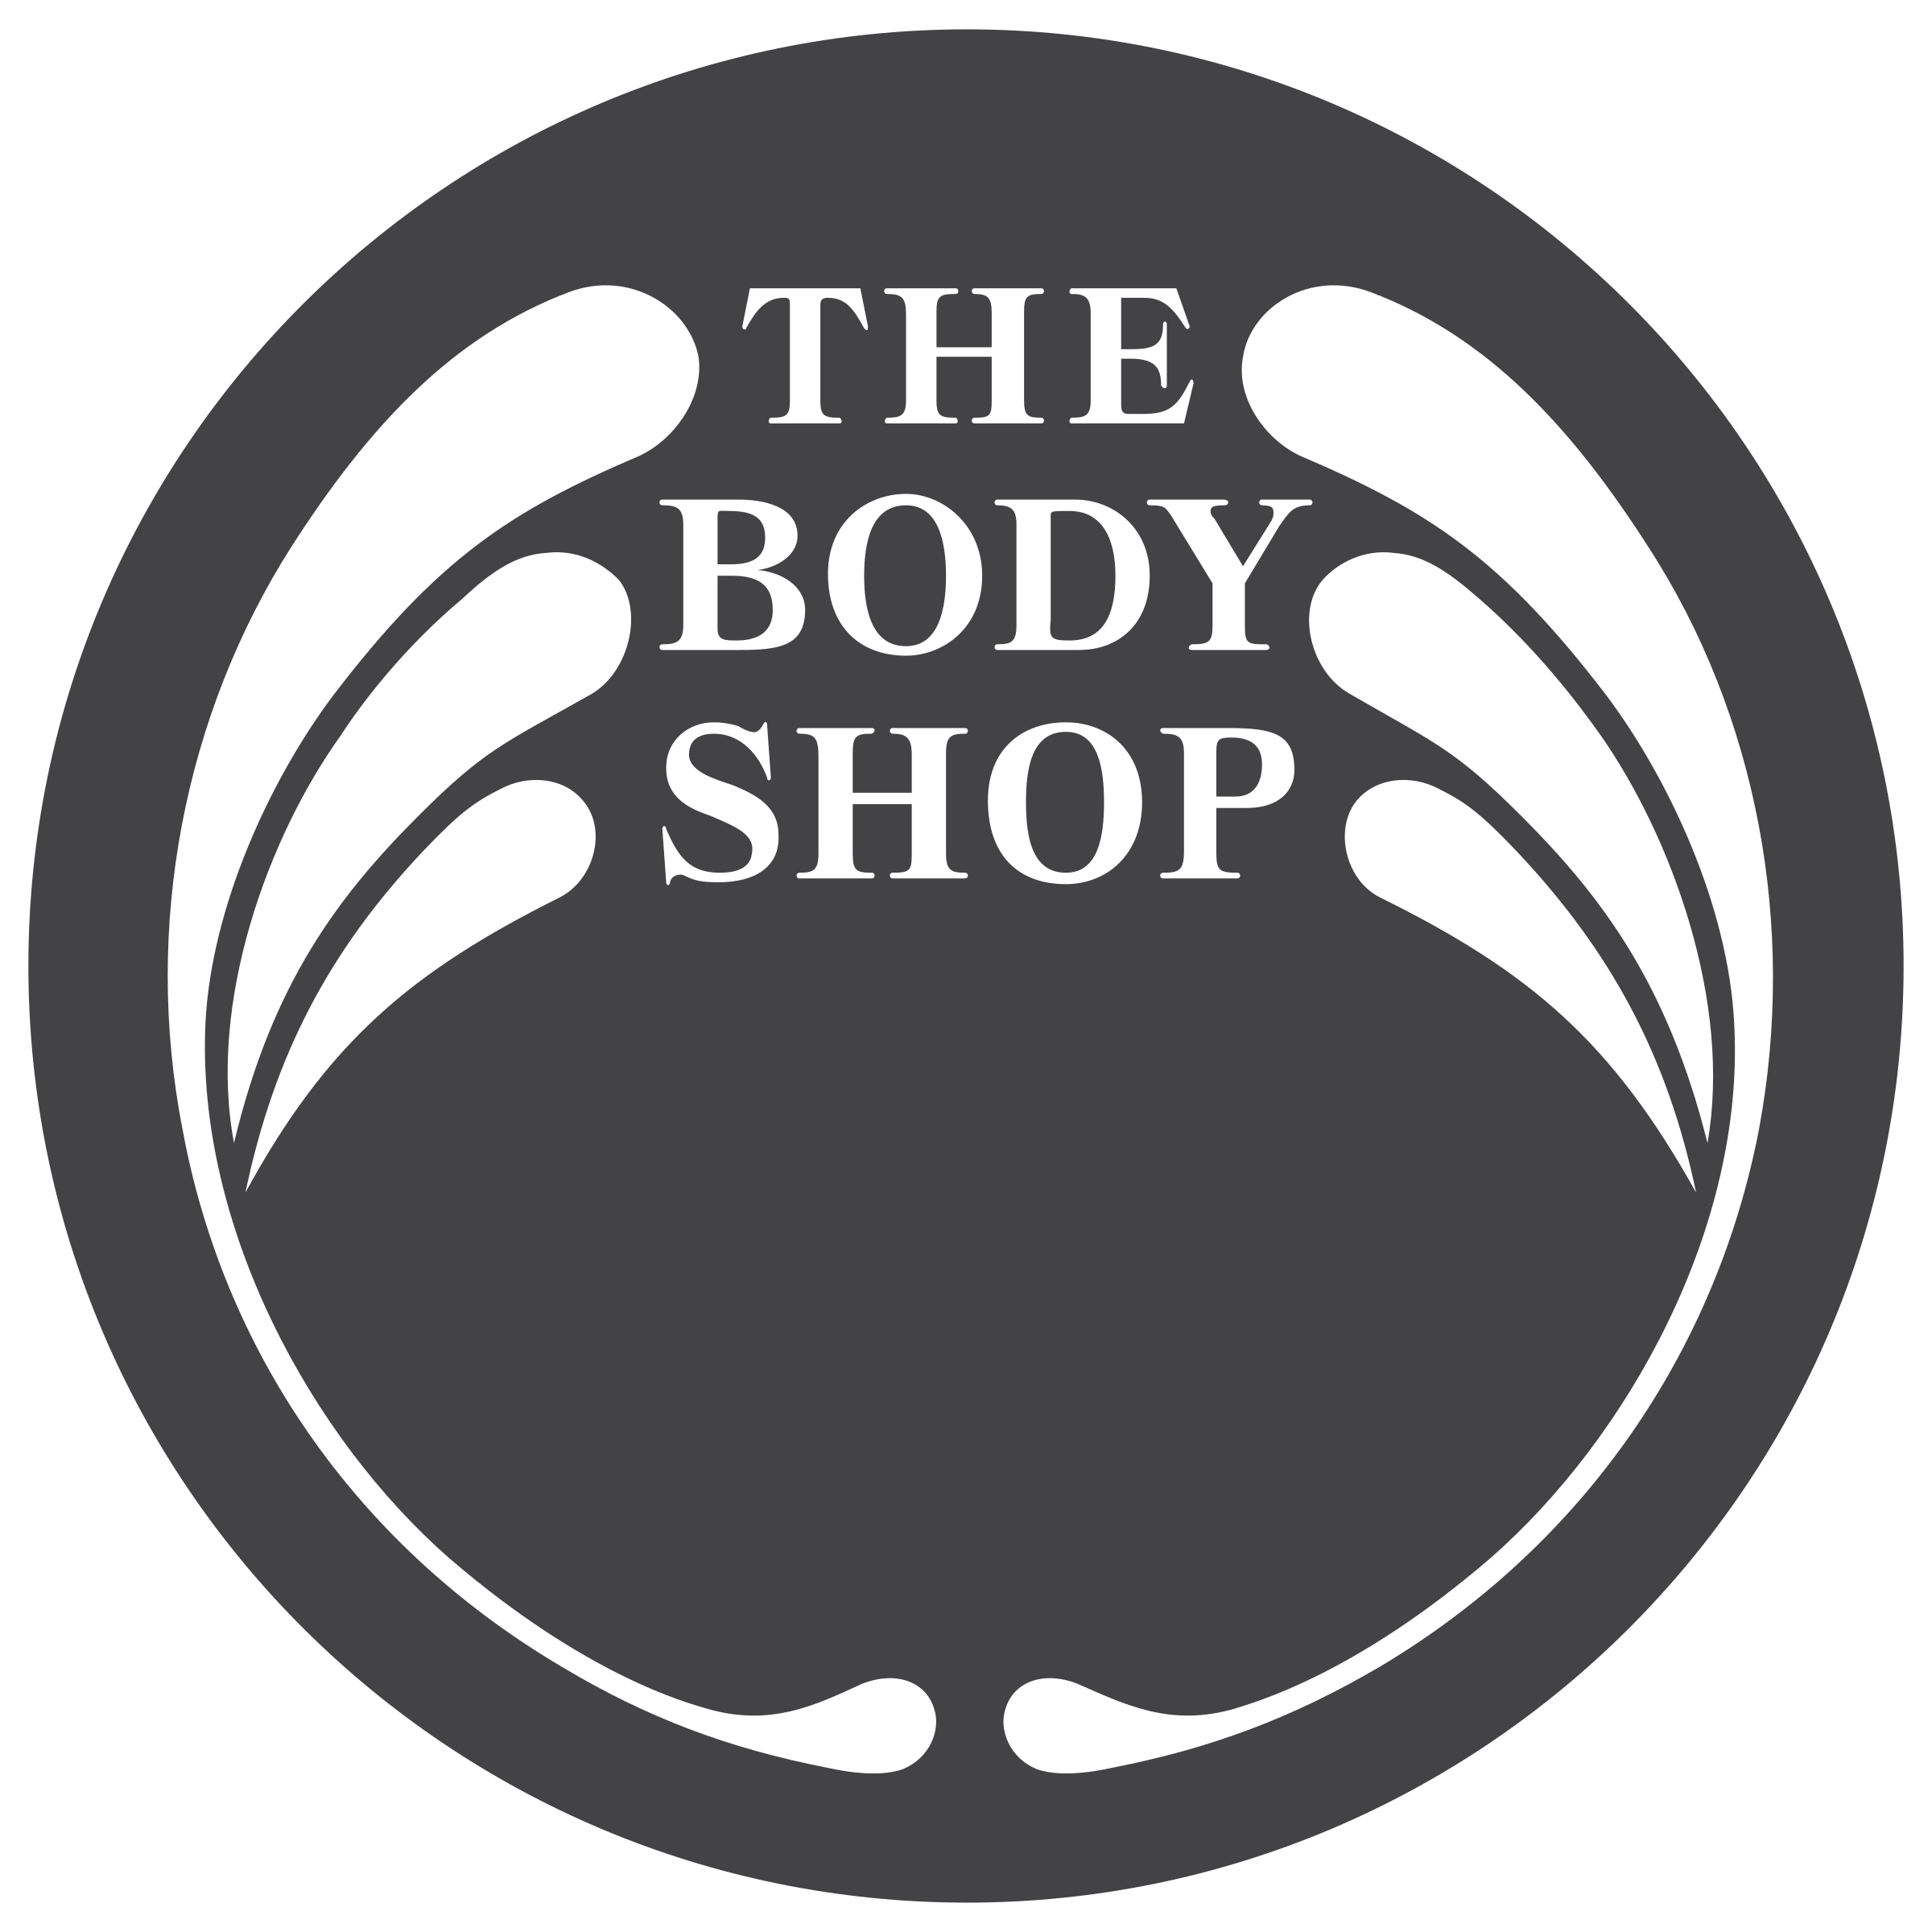 Body Shop Logo - The Body Shop Logo PNG Transparent & SVG Vector - Freebie Supply